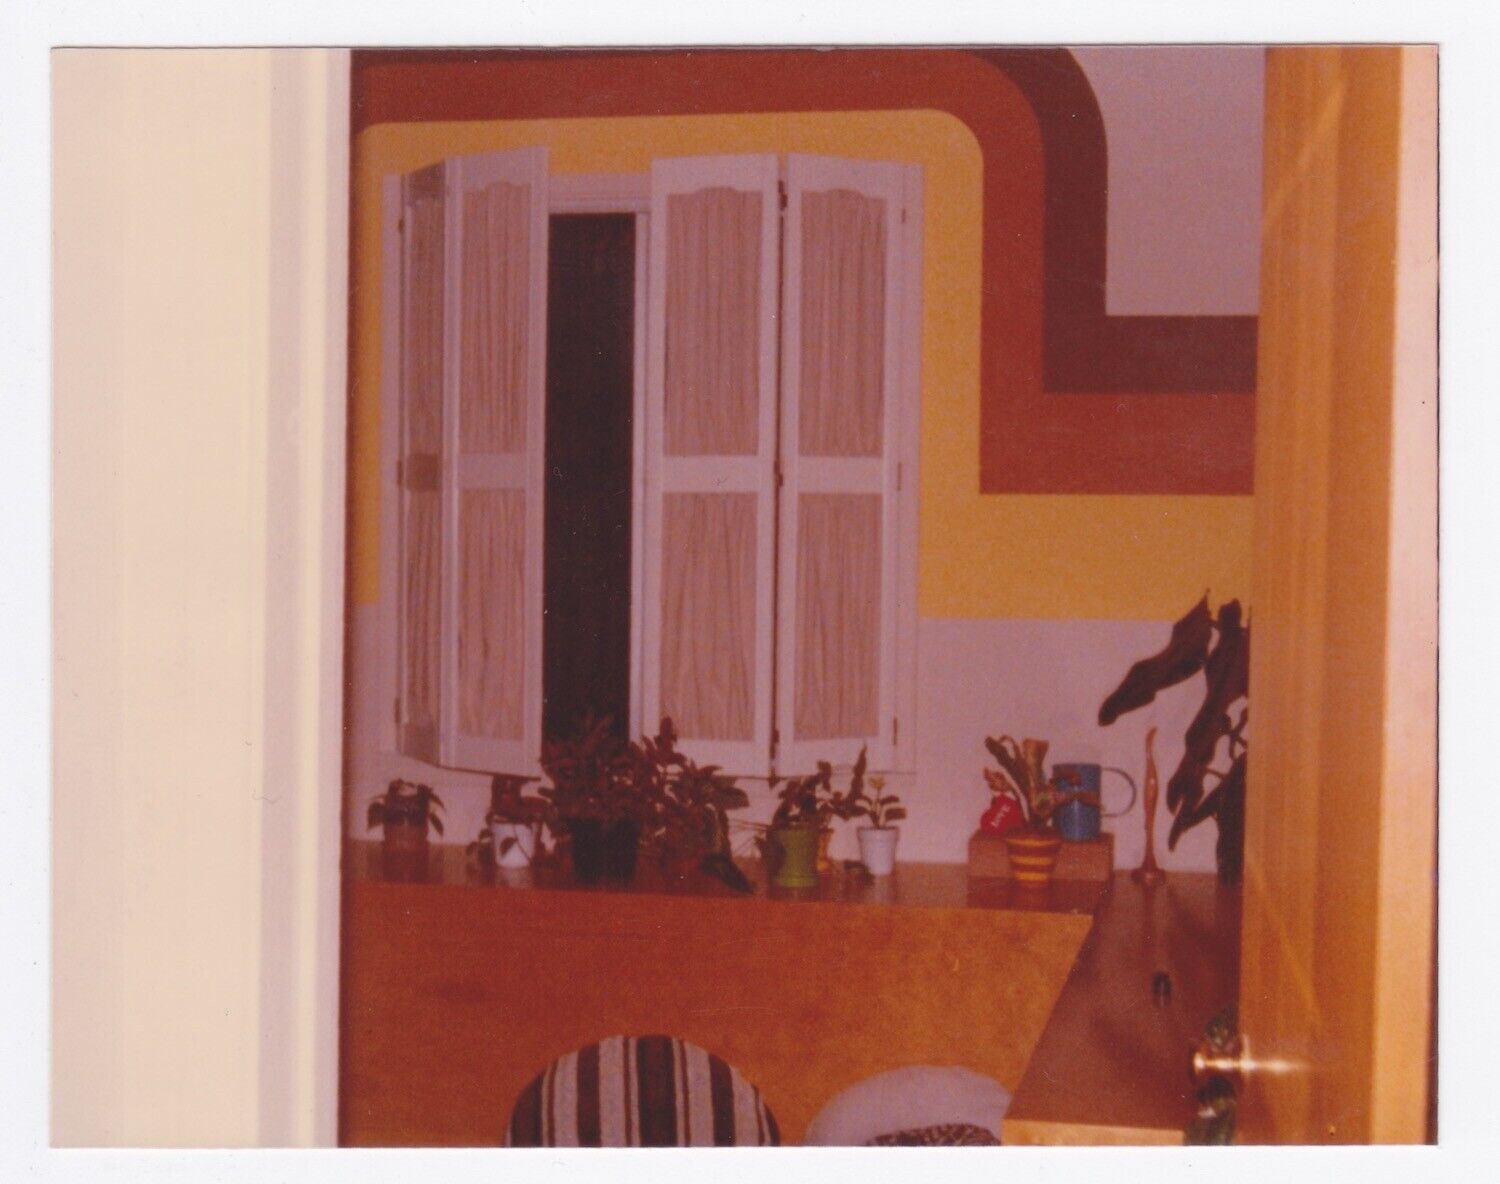 Vintage 70s PHOTO Interior Room w/ Geometric Design on Wall & Shelf w/ Plants